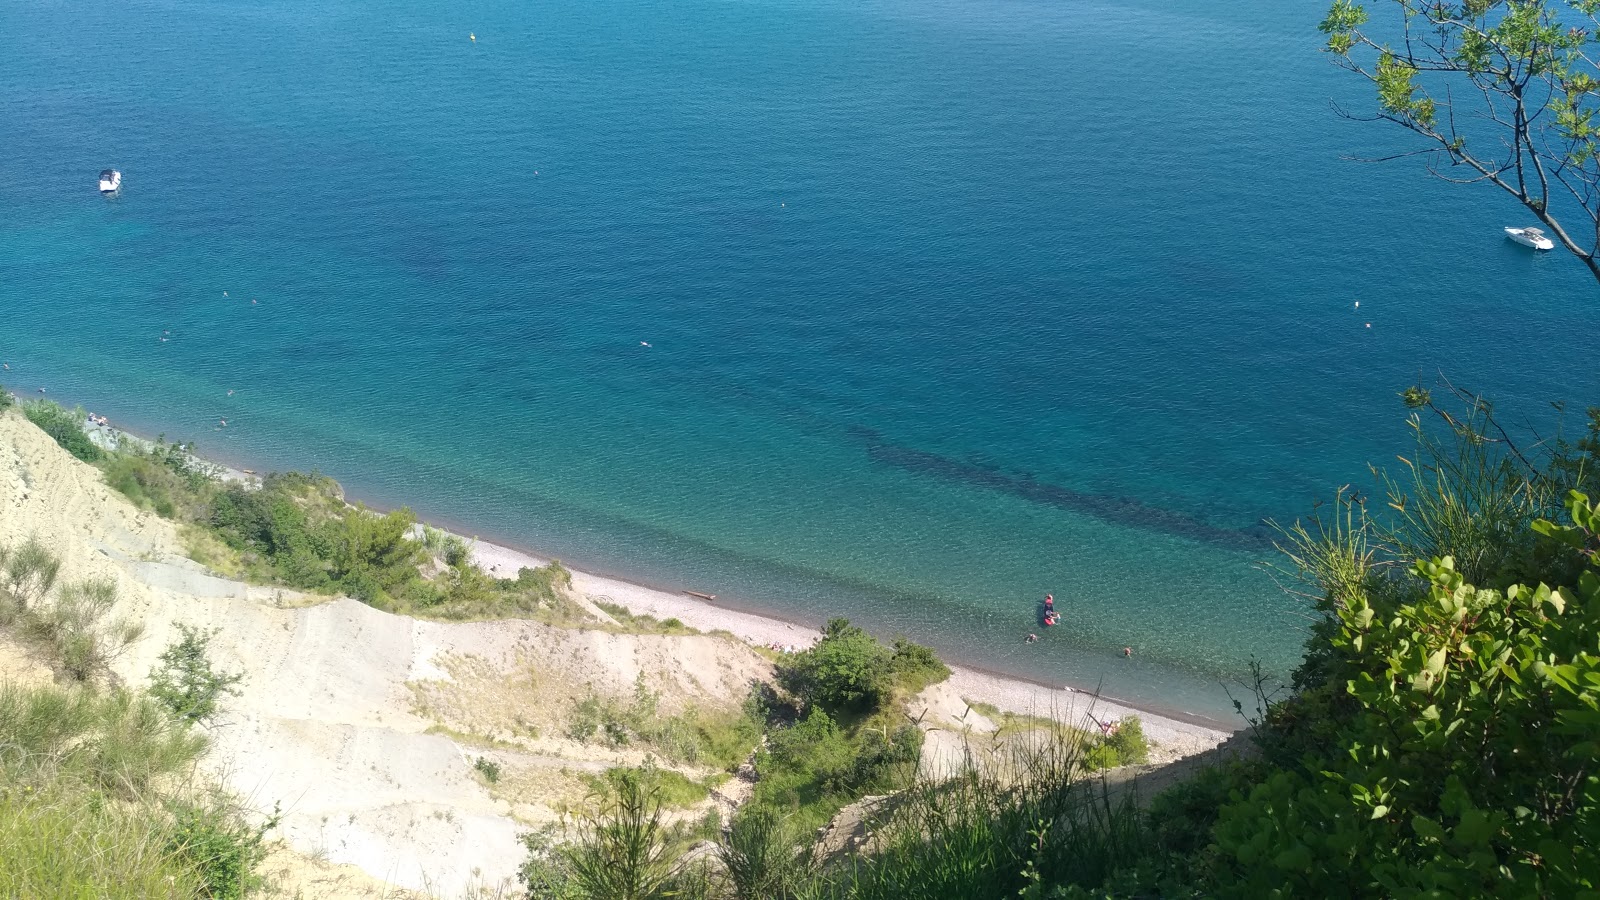 Foto di Bele Skale beach ubicato in zona naturale